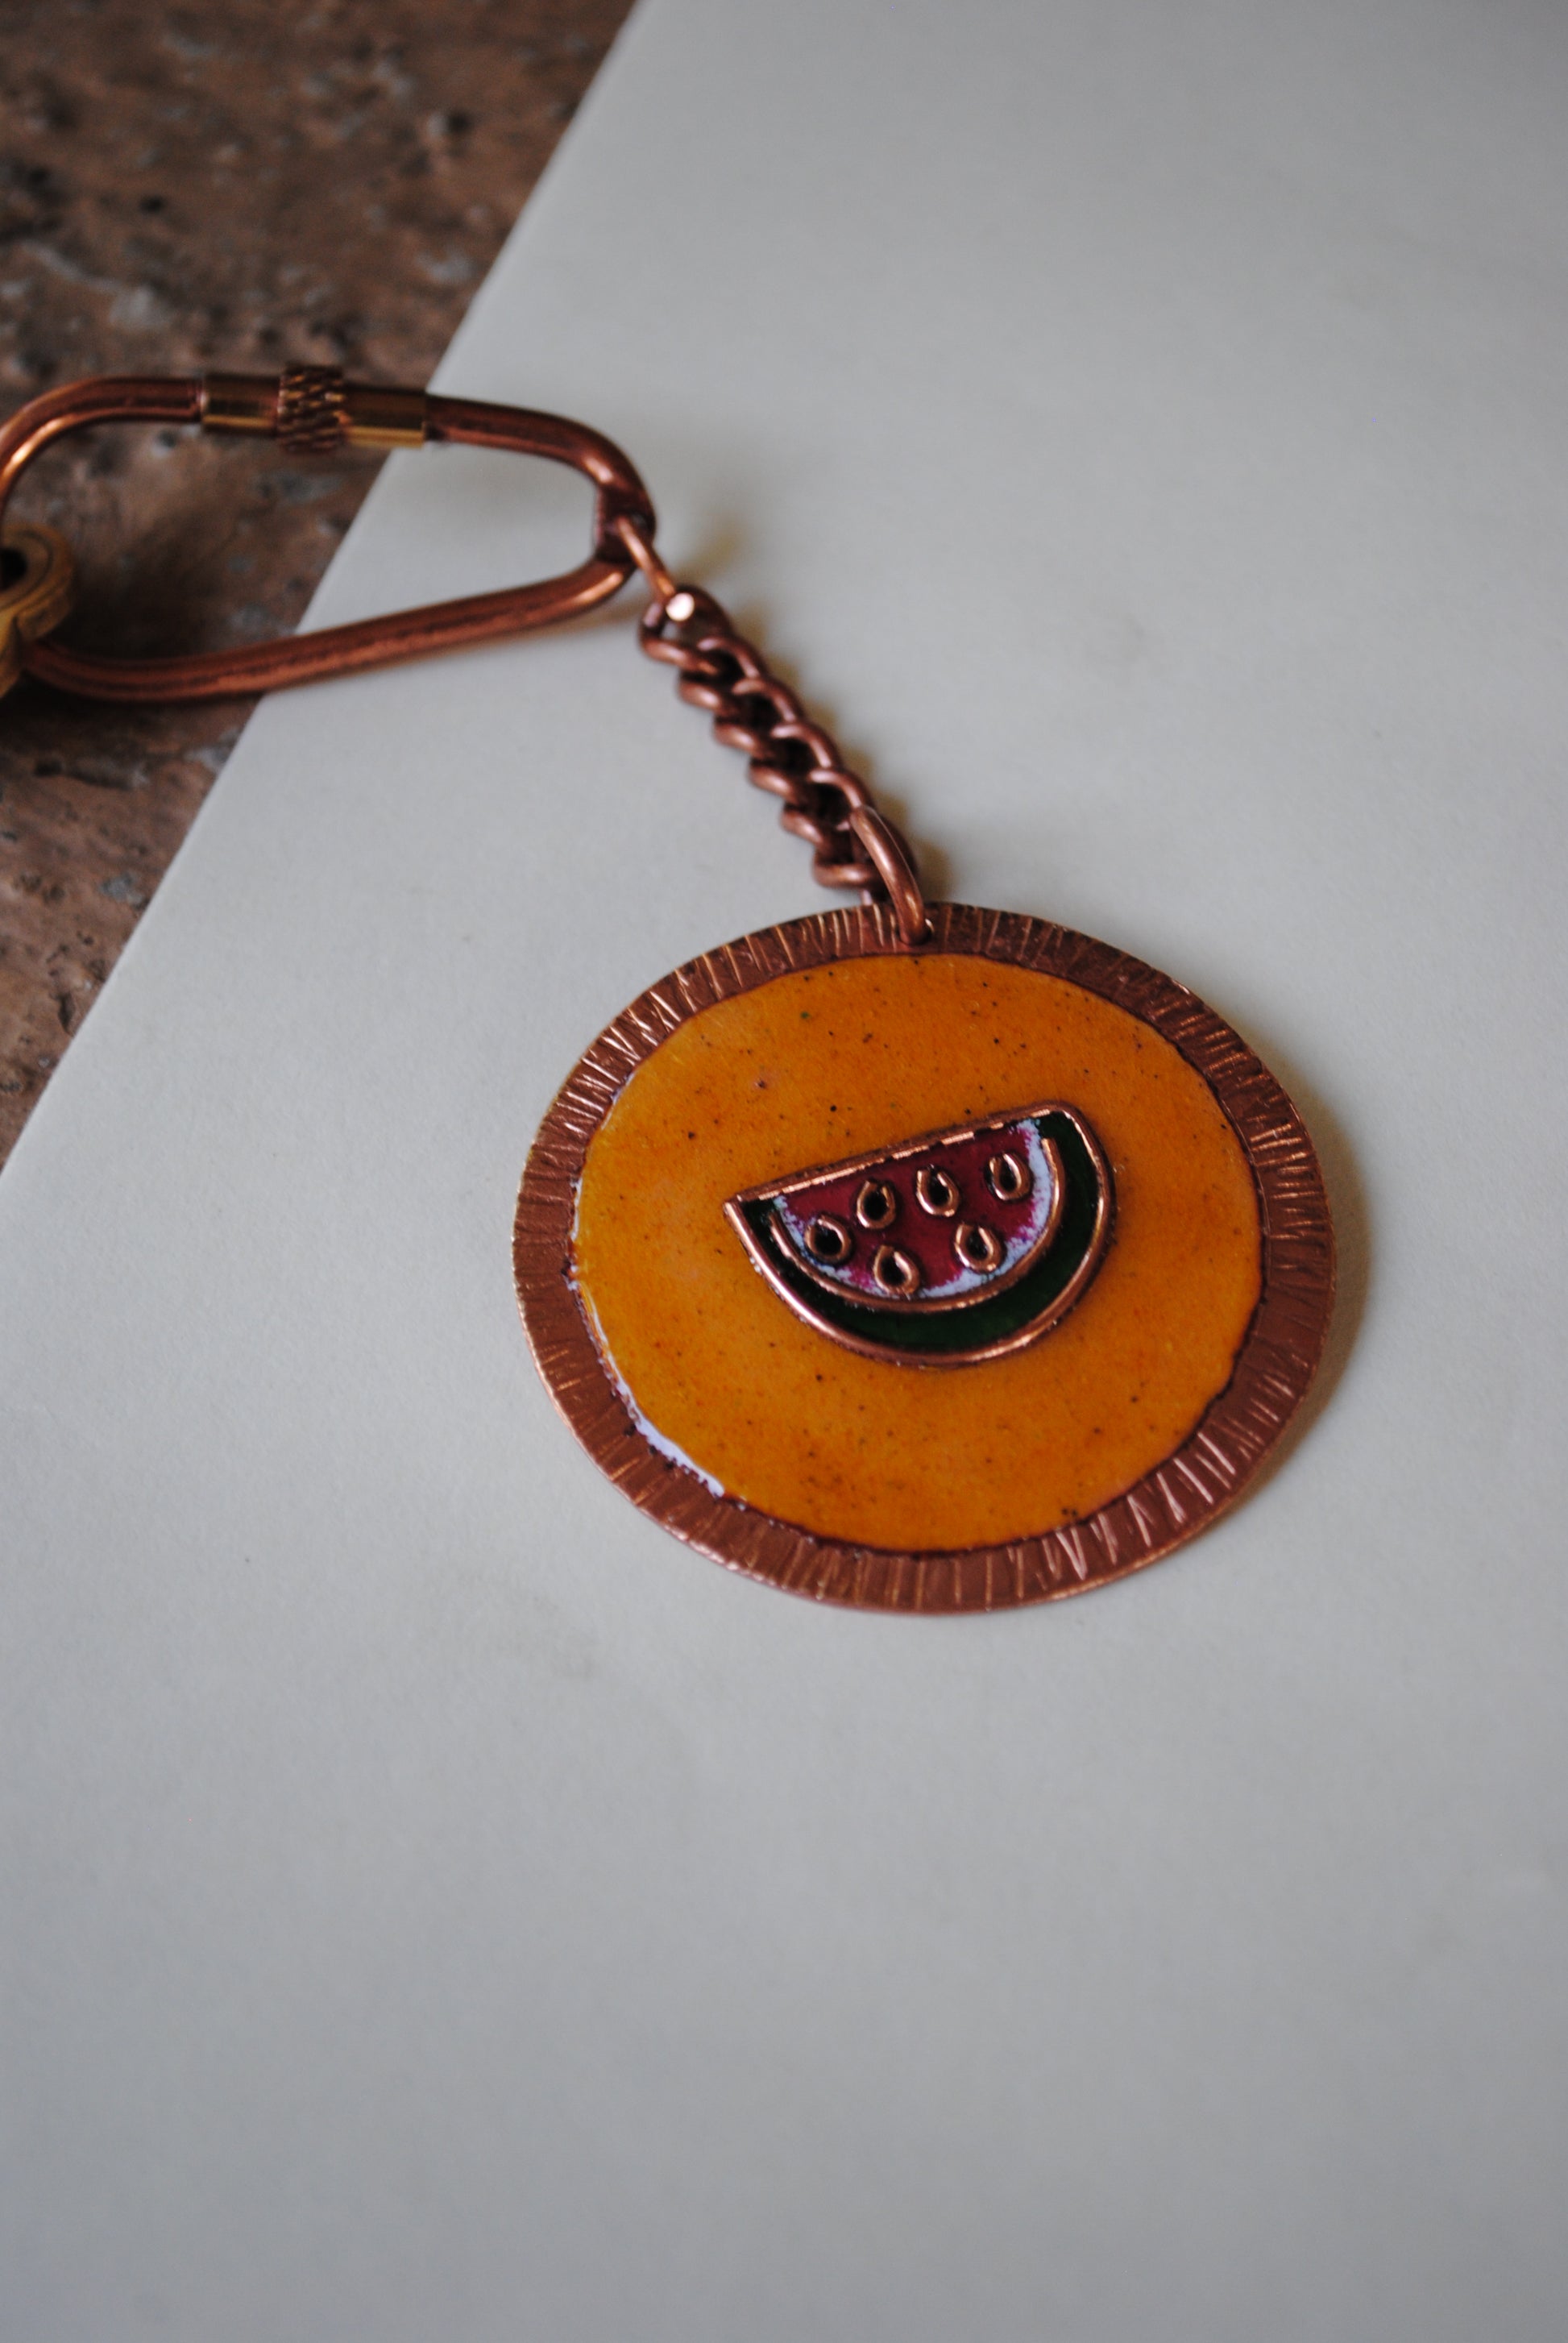 Copper enamel trinkets, funky keychains handcrafted in Maharashtra, India. Tarbooz watermelon theme